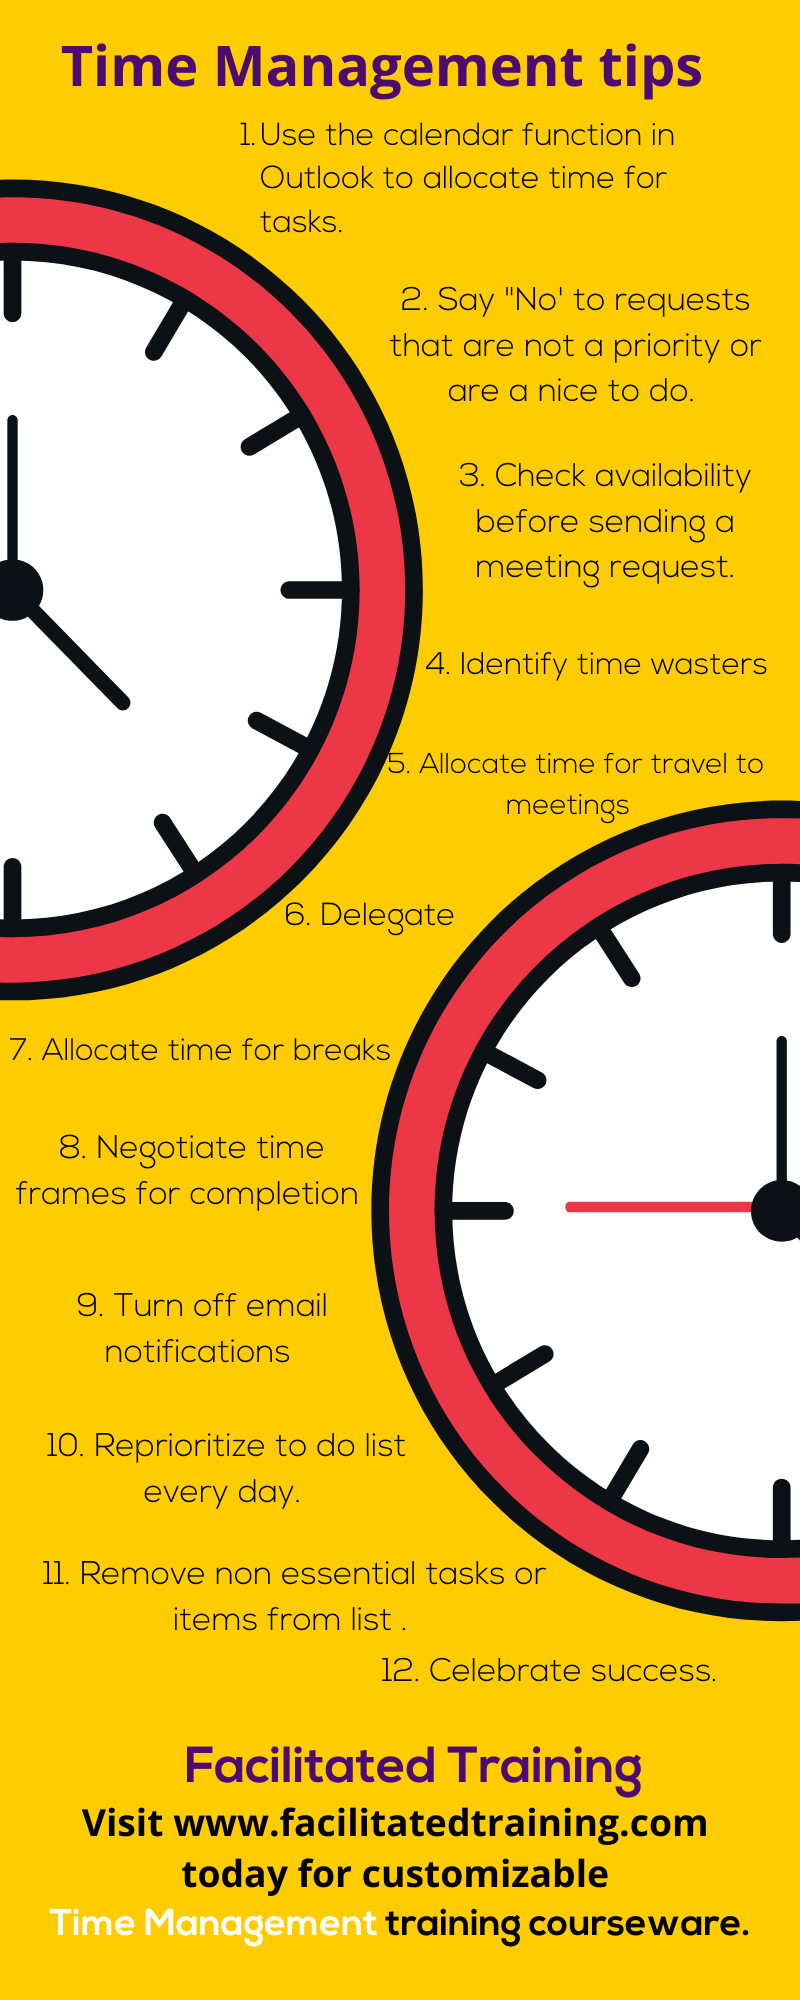 5 Ways to Improve Your Clock Management - TheChessWorld